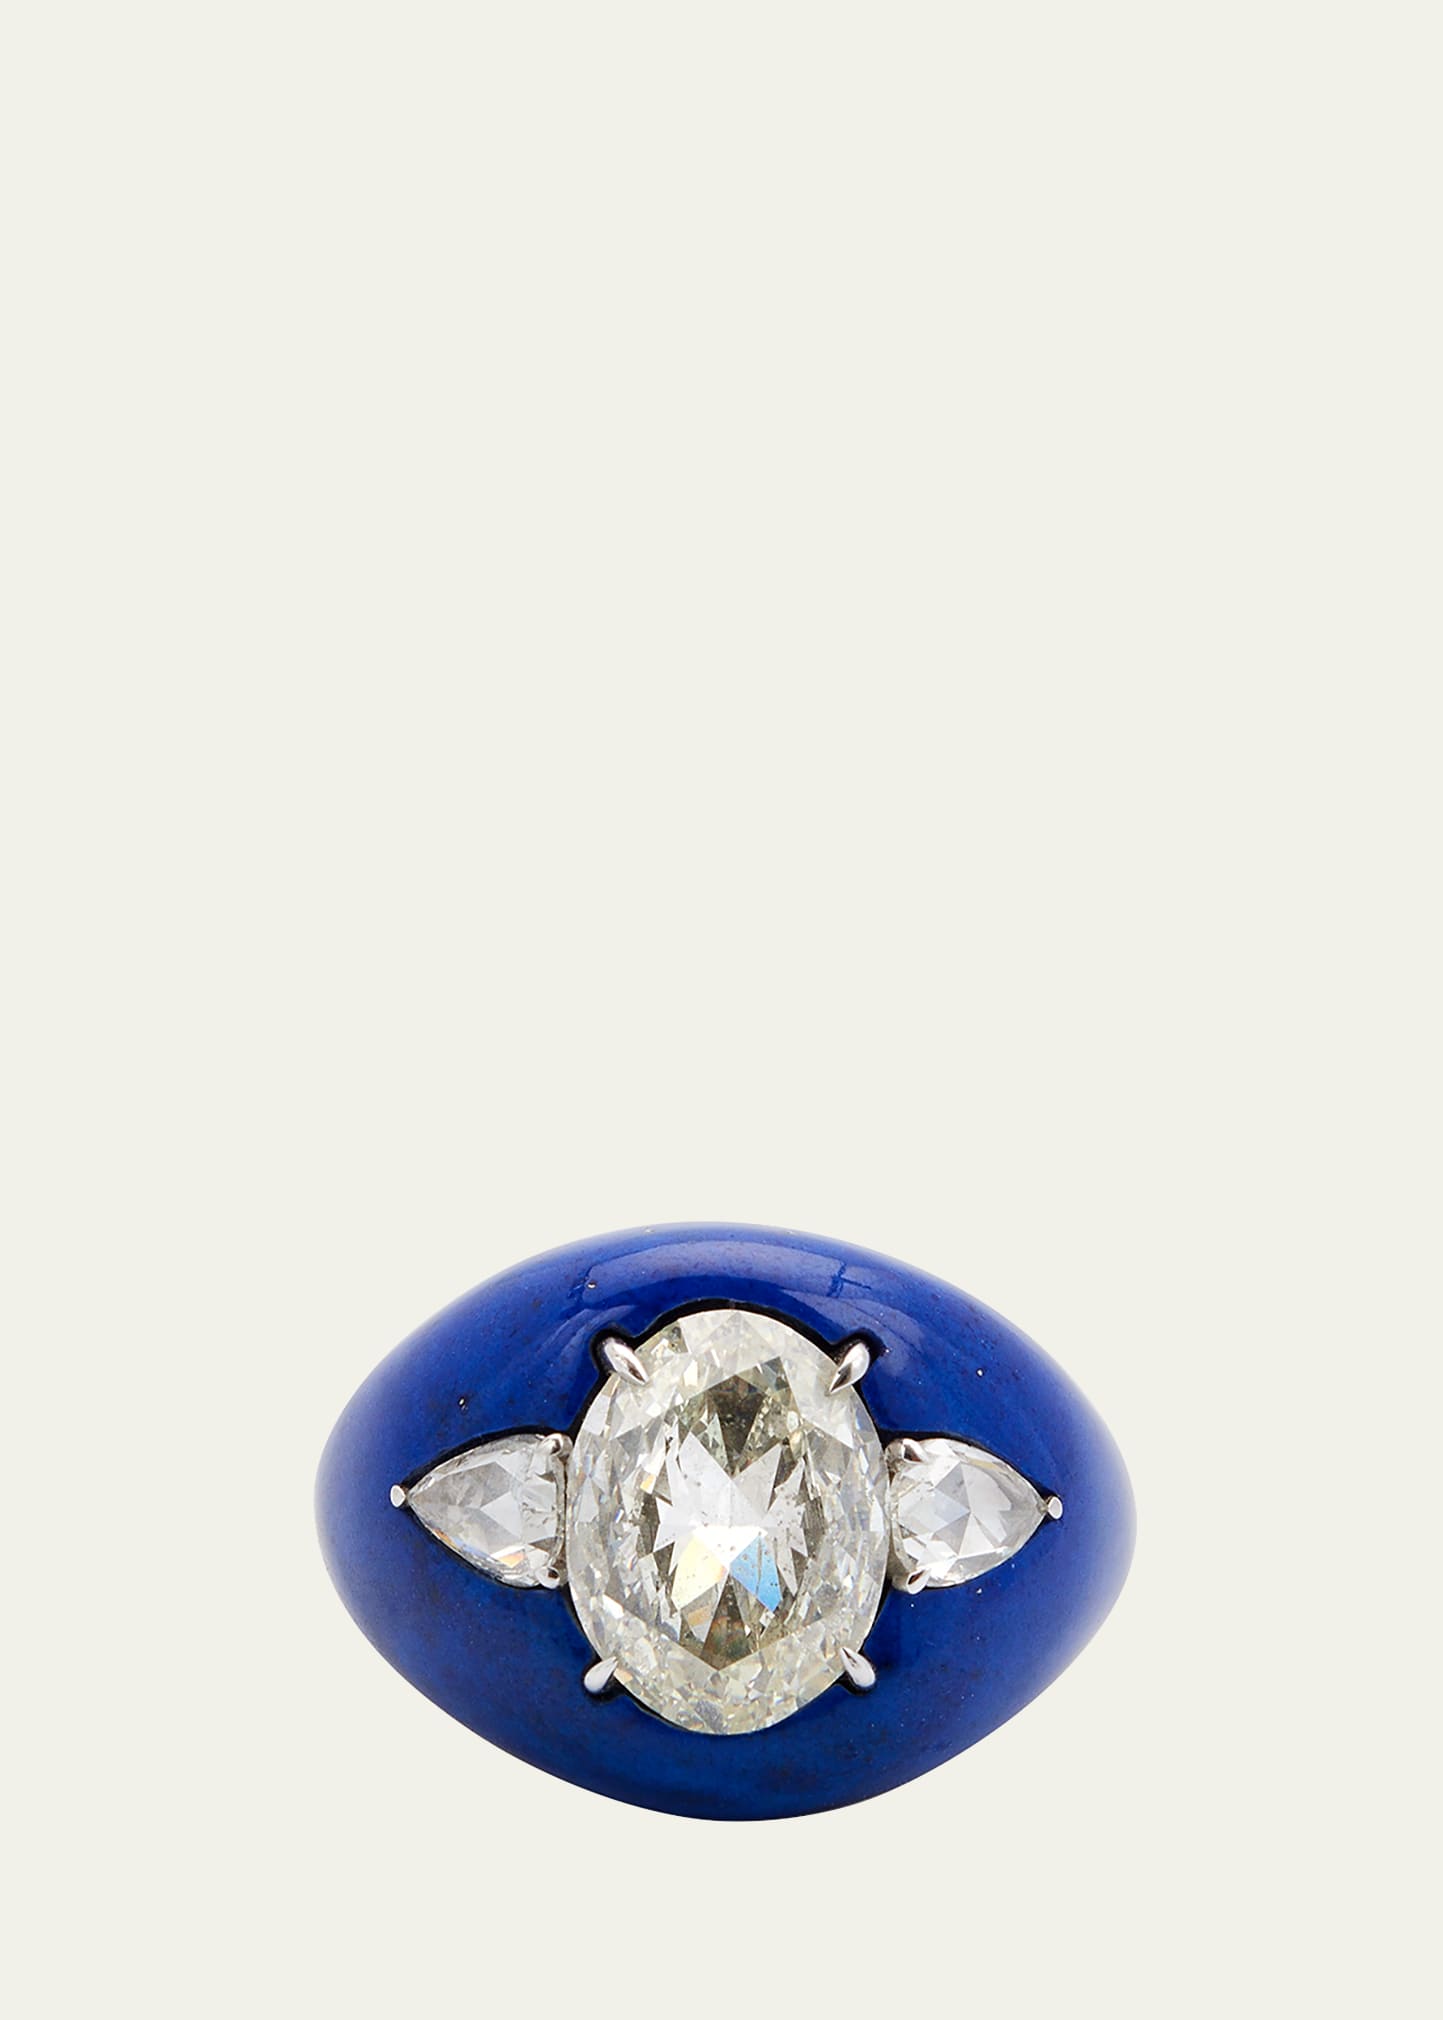 White Gold Ring with Diamonds and Lapis Lazuli